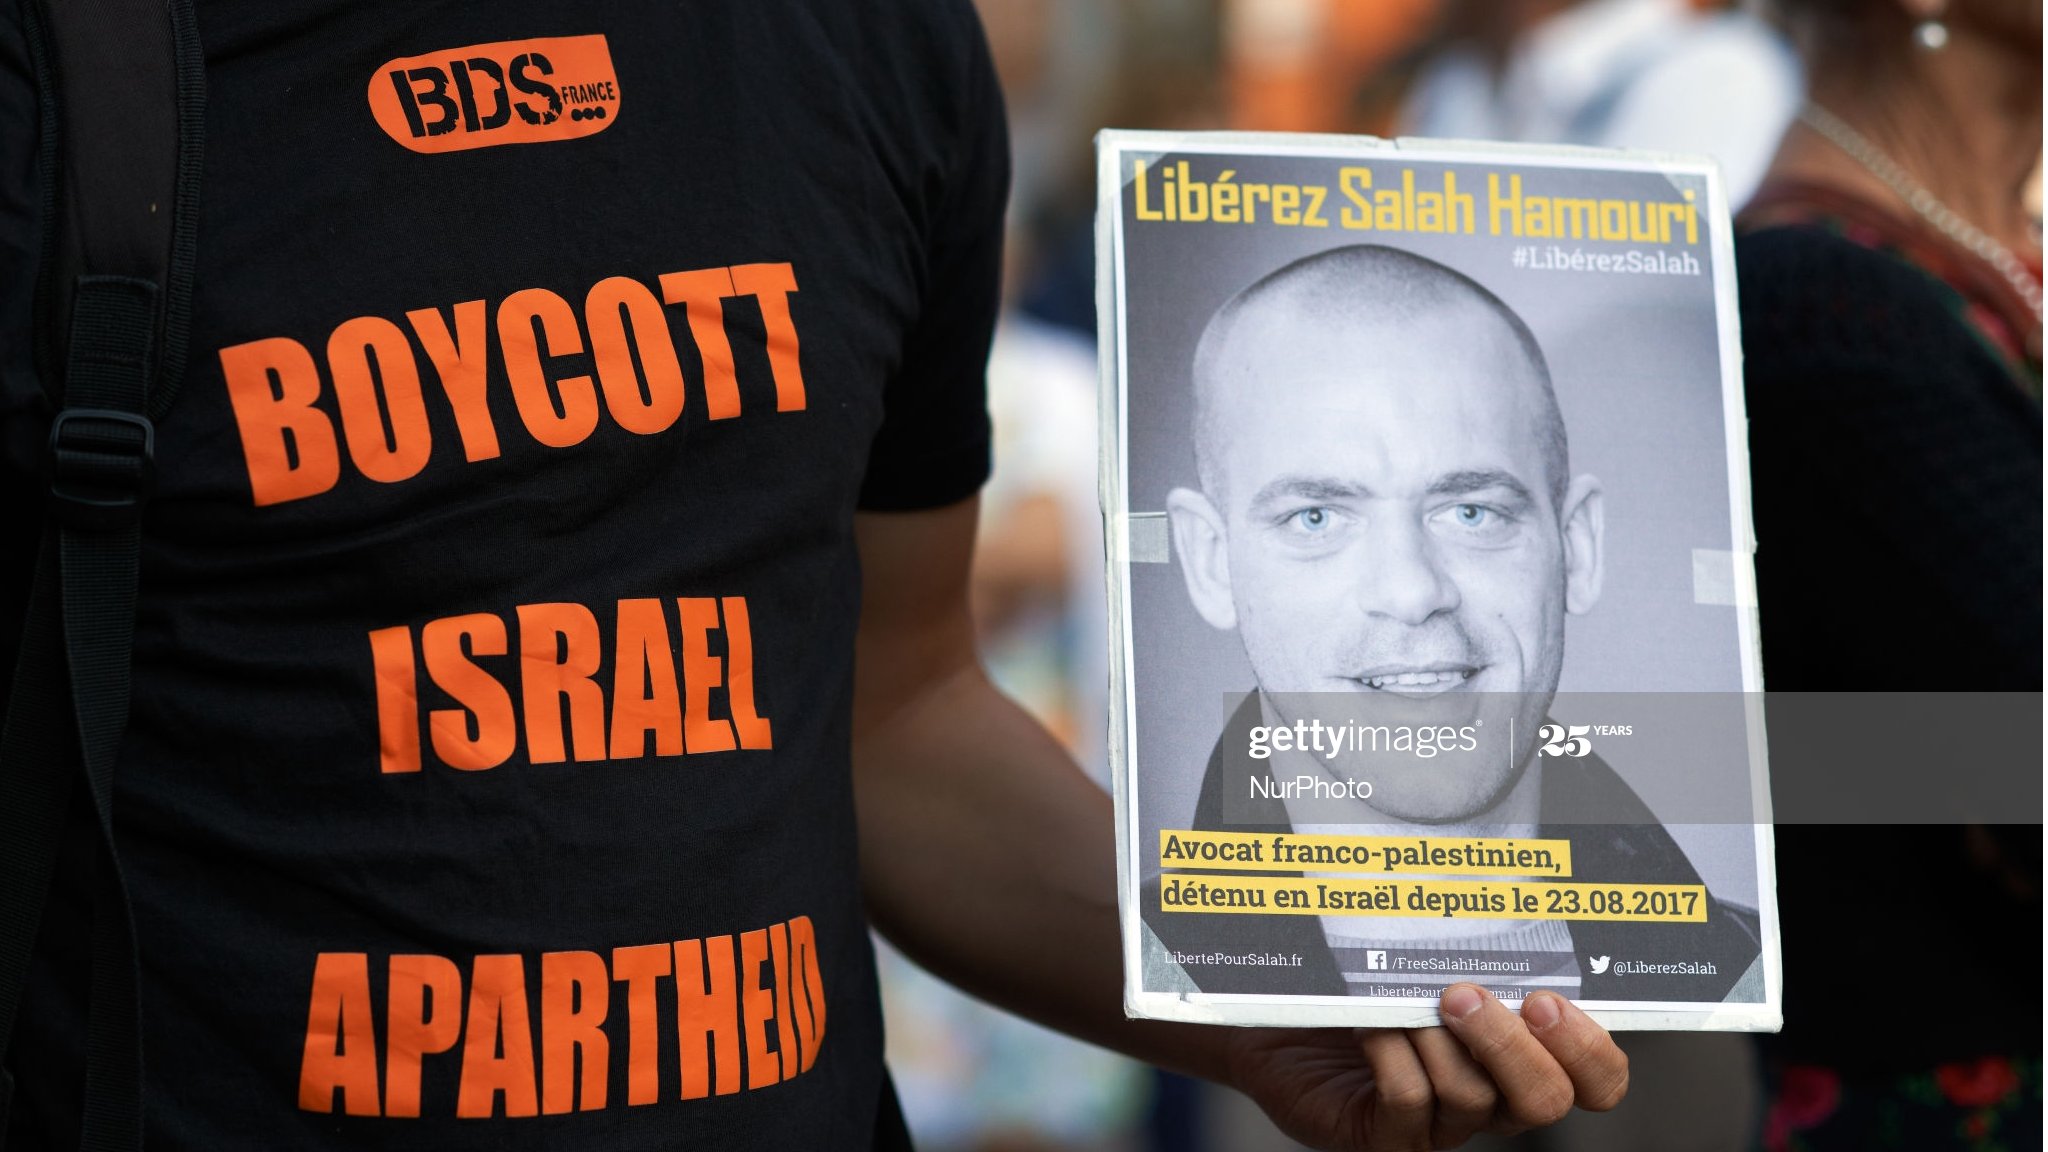 Israel boycott anti-Semitic, says US - BBC News